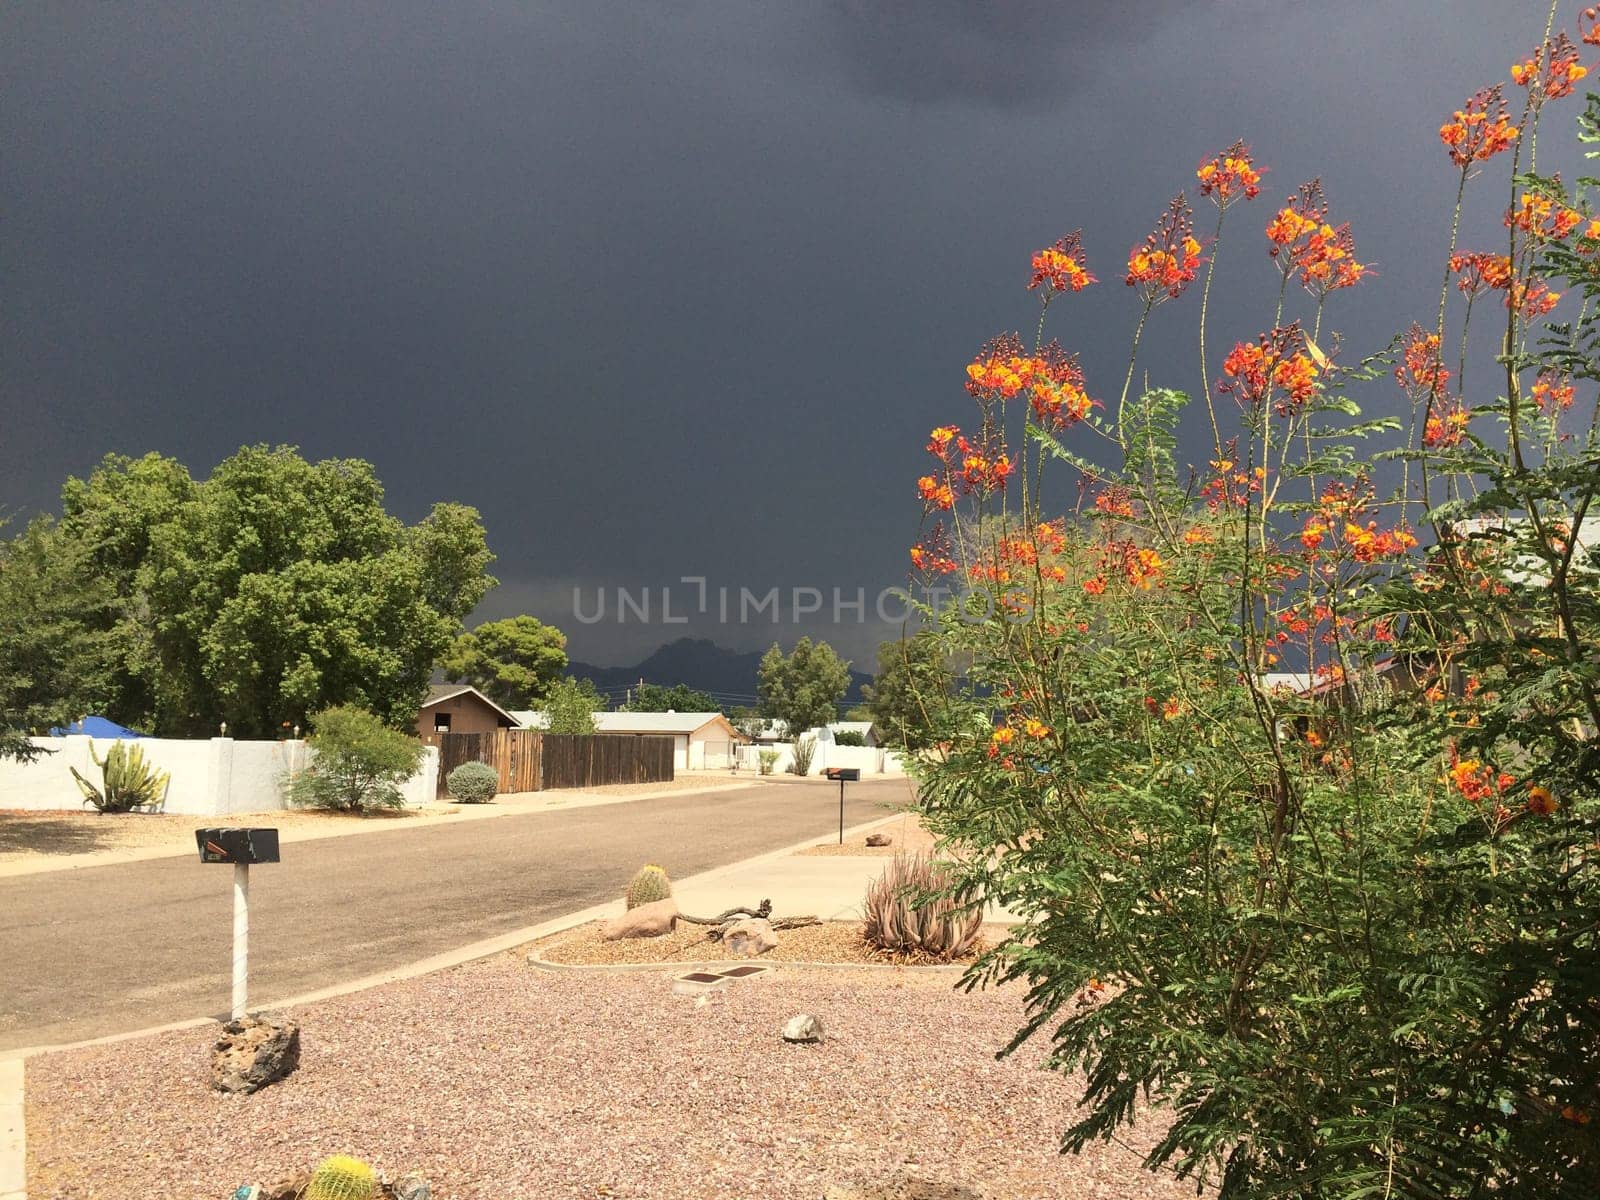 Dark Sky, Summer Storm in Apache Junction, Arizona Neighborhood. High quality photo